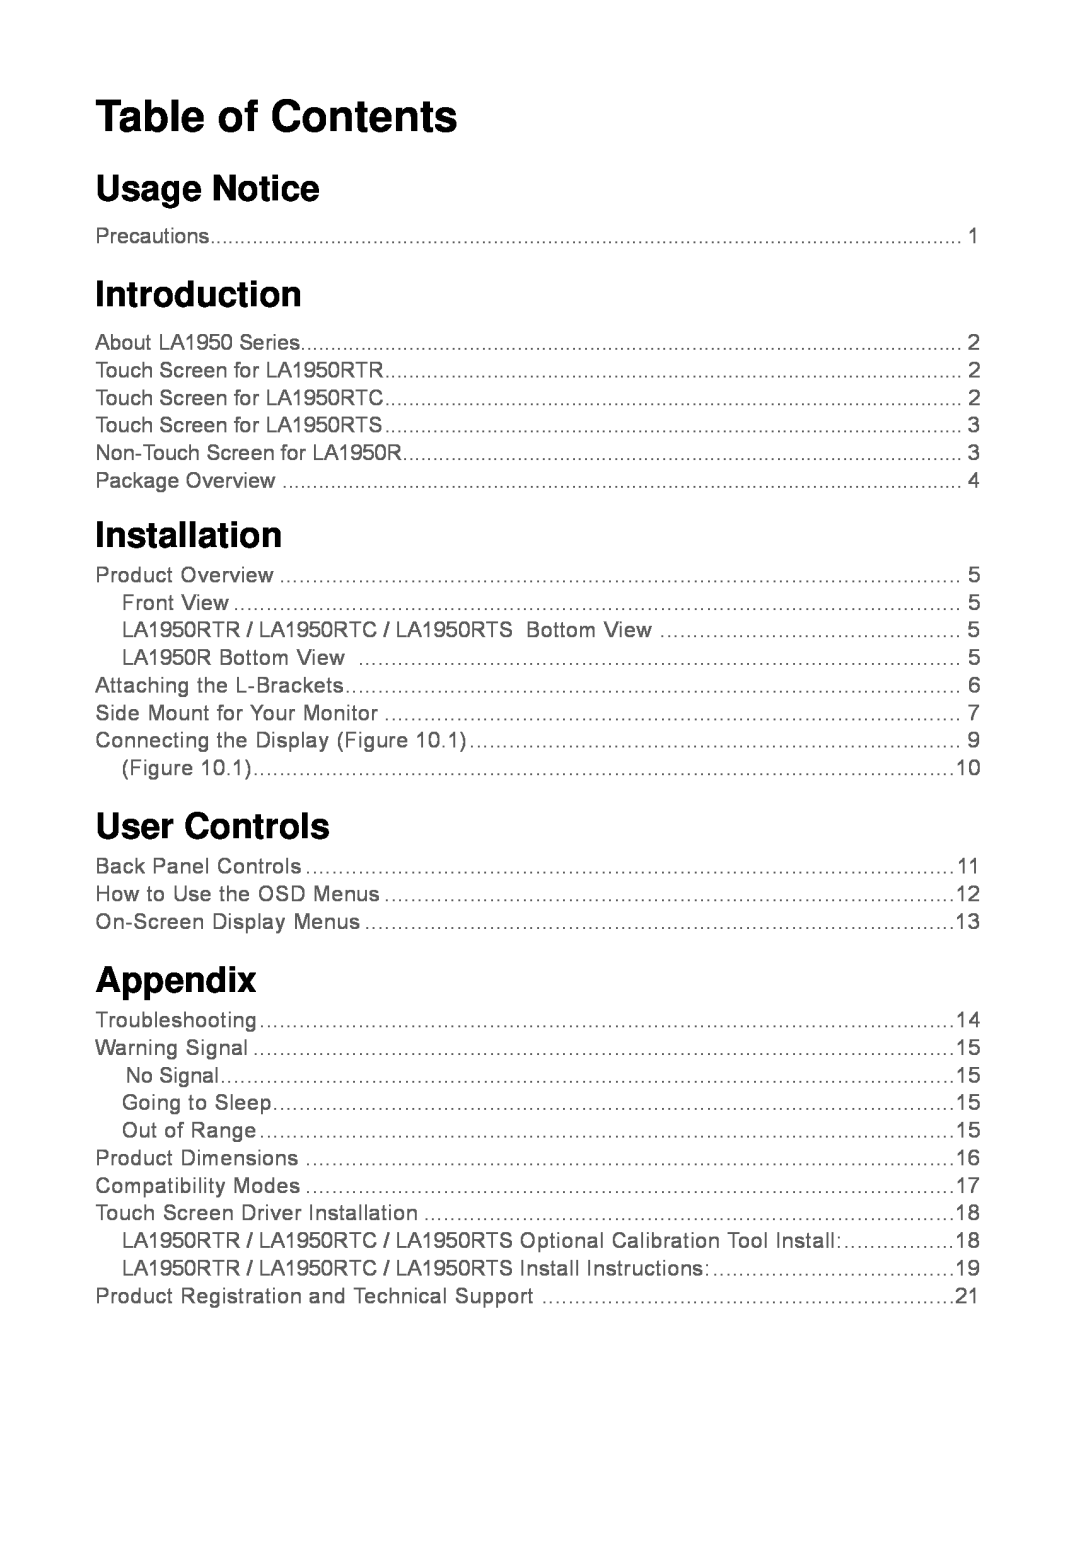 Planar LA1950RTR, LA1950RTC, LA1950RTS Usage Notice, Introduction, Installation, User Controls, Appendix, Table of Contents 